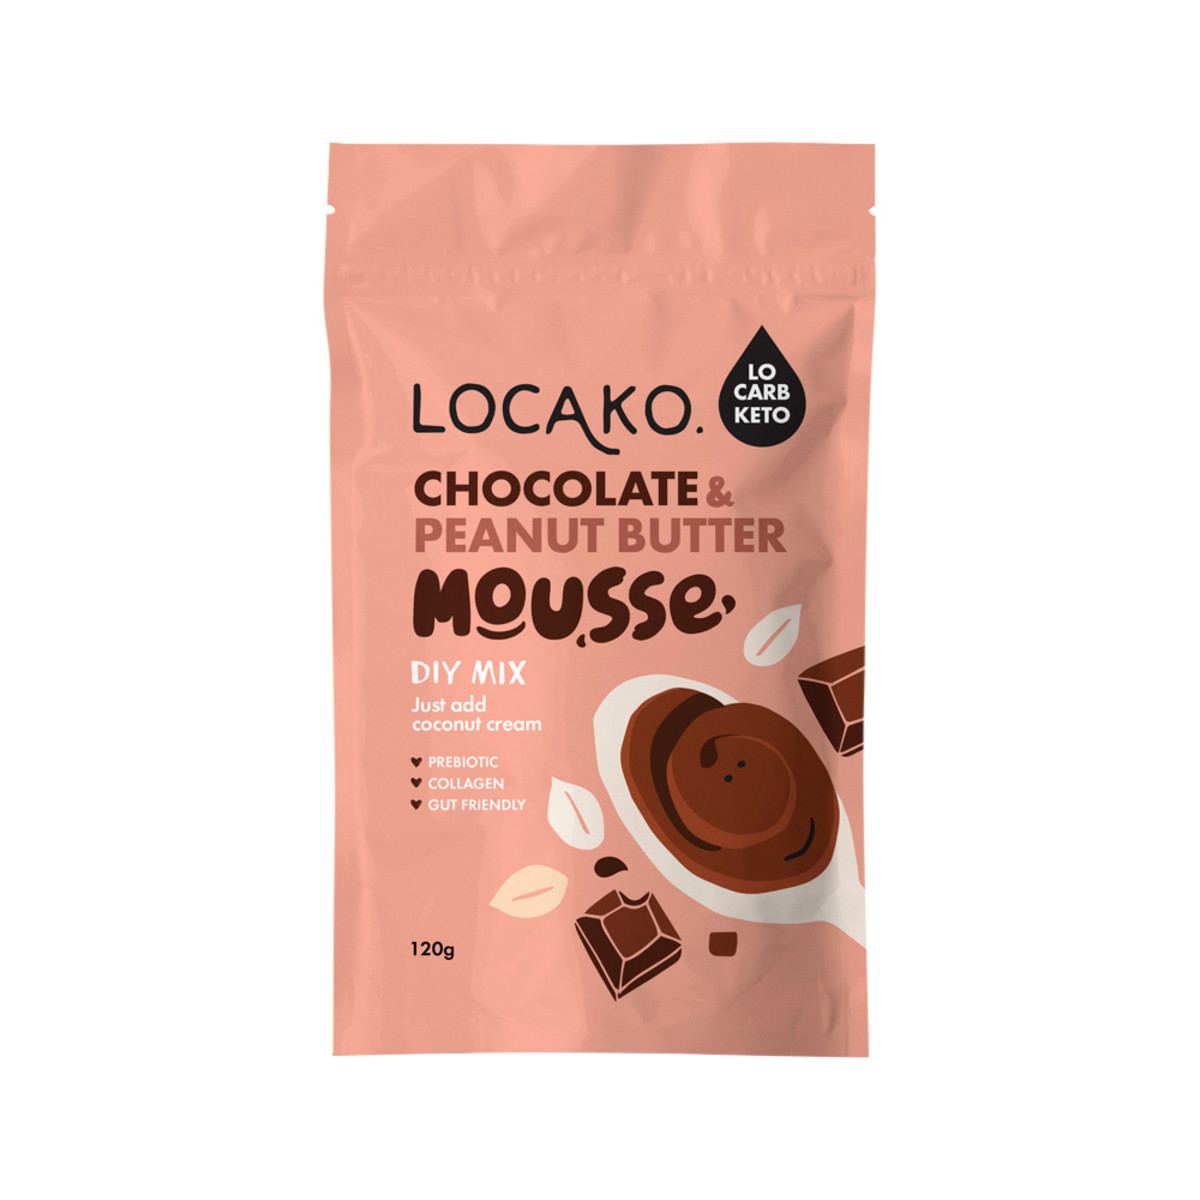 LOCAKO - Mousse Chocolate and Peanut Butter (DIY Mix)